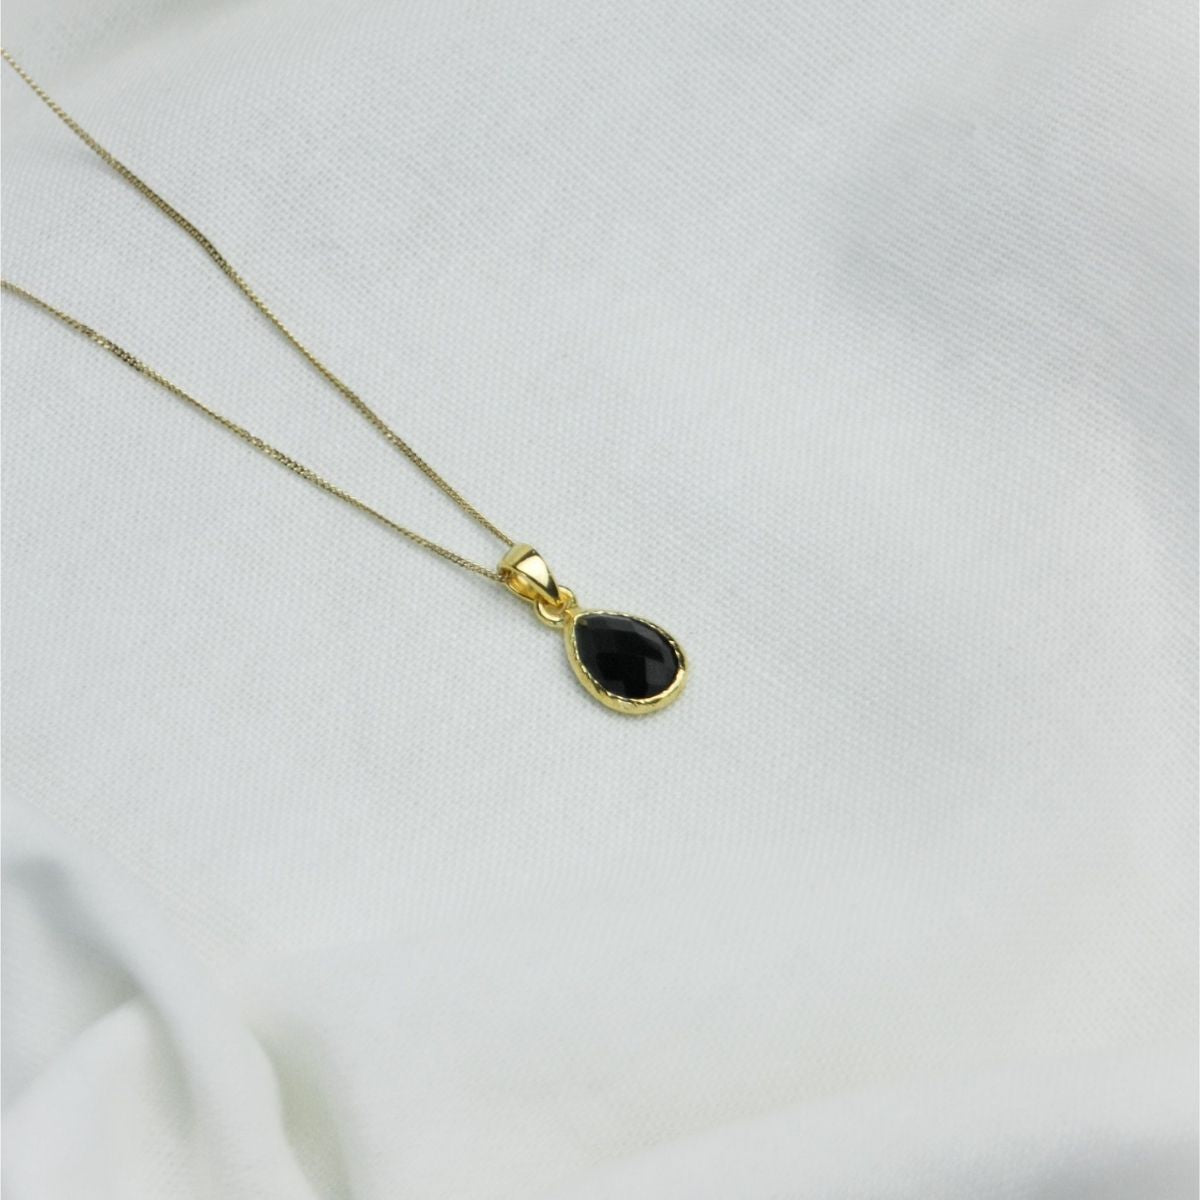 a black pendant necklace on a white sheet